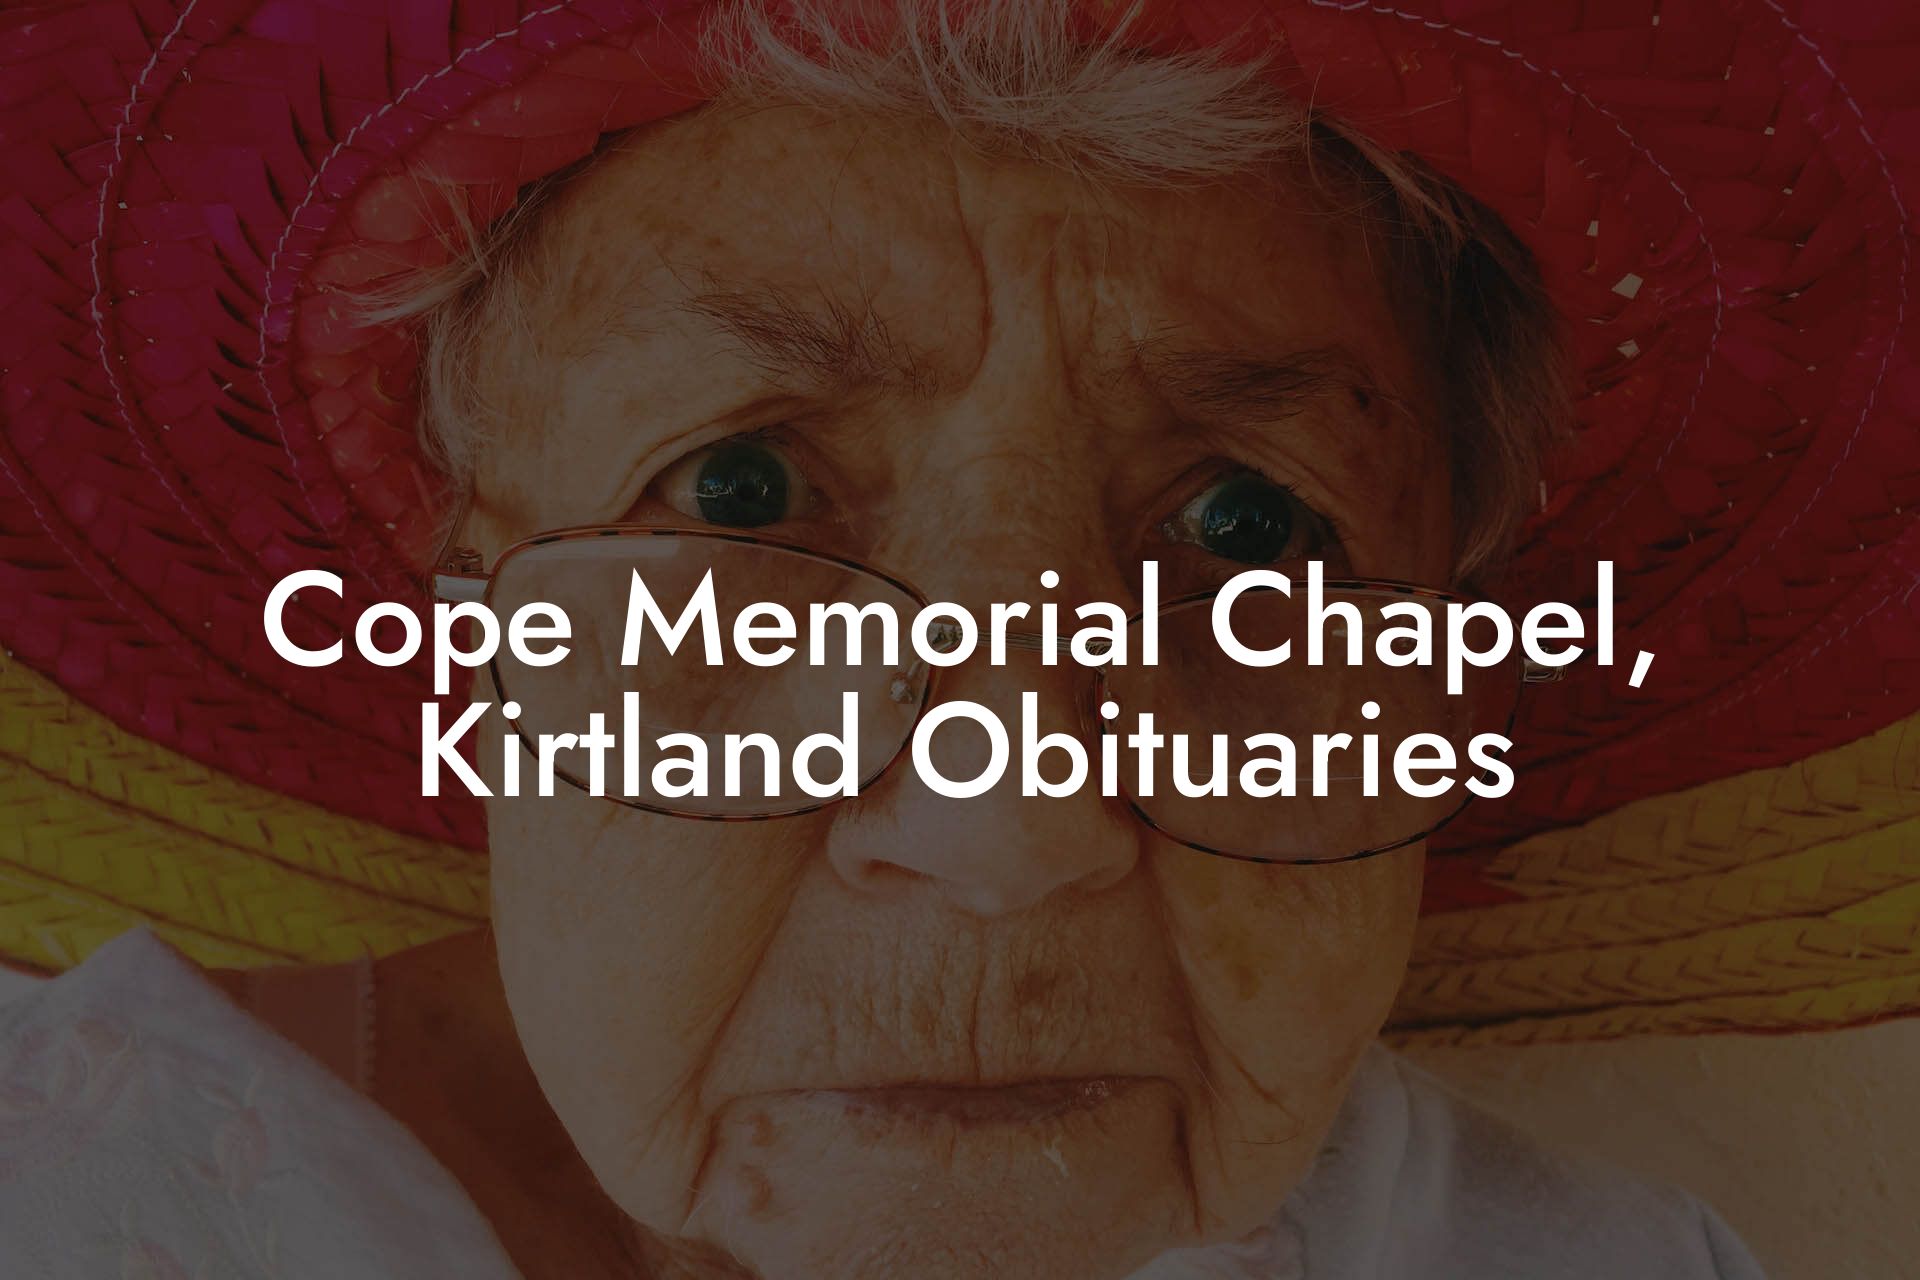 Cope Memorial Chapel Kirtland Obituaries